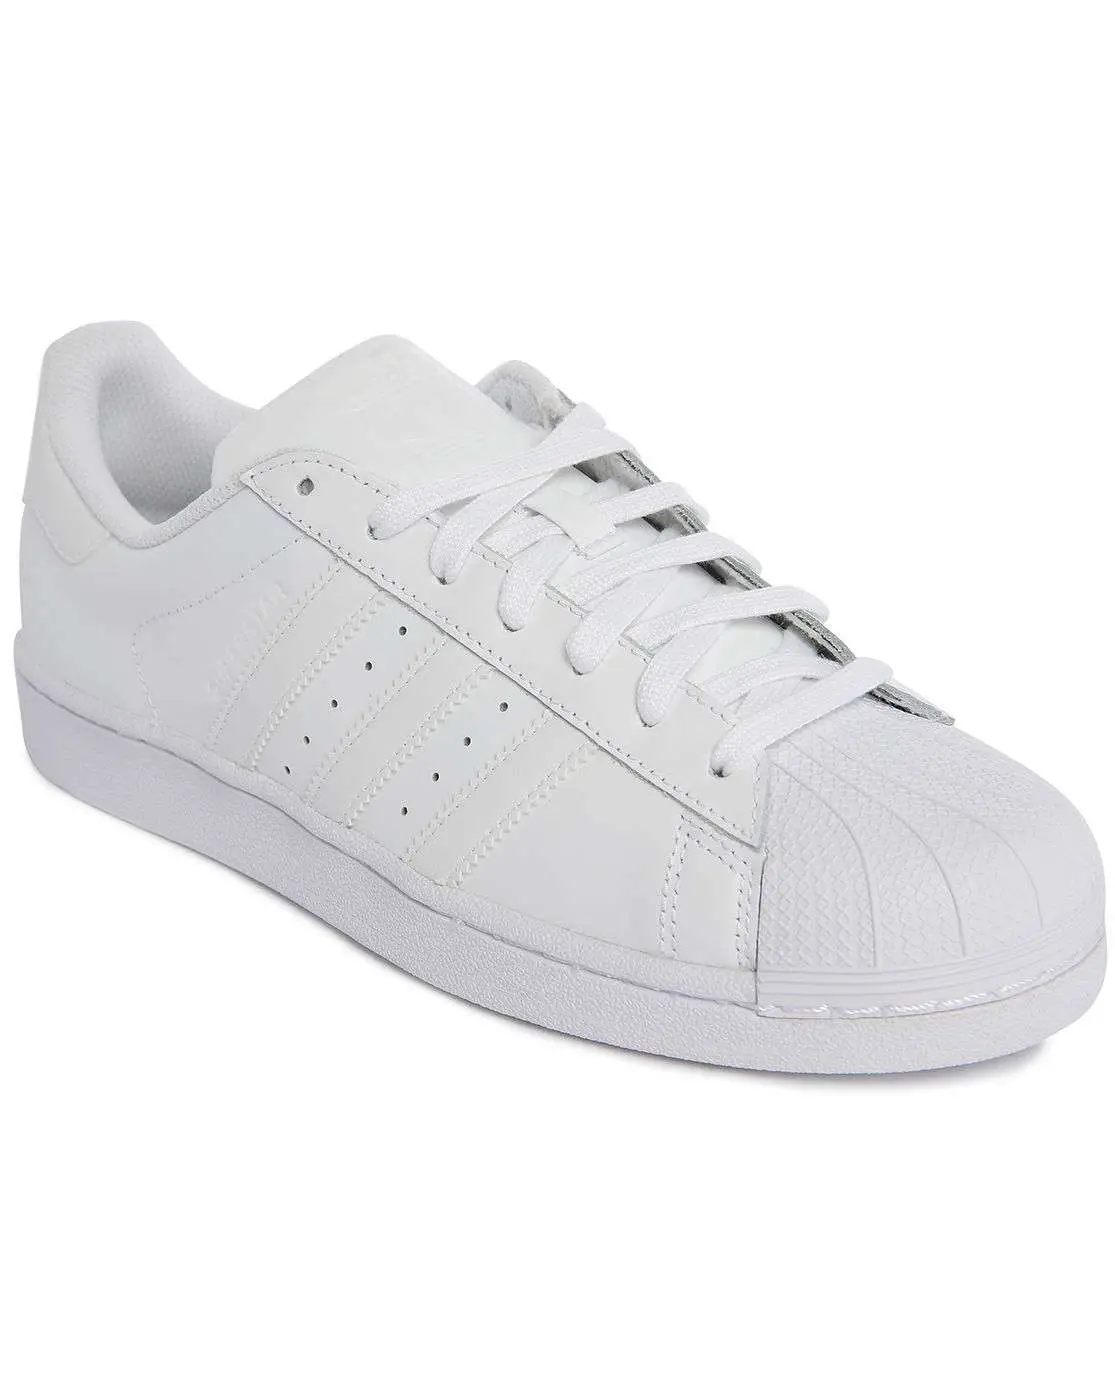 Adidas originals Superstar Classic Mono White Leather Sneakers in White ...